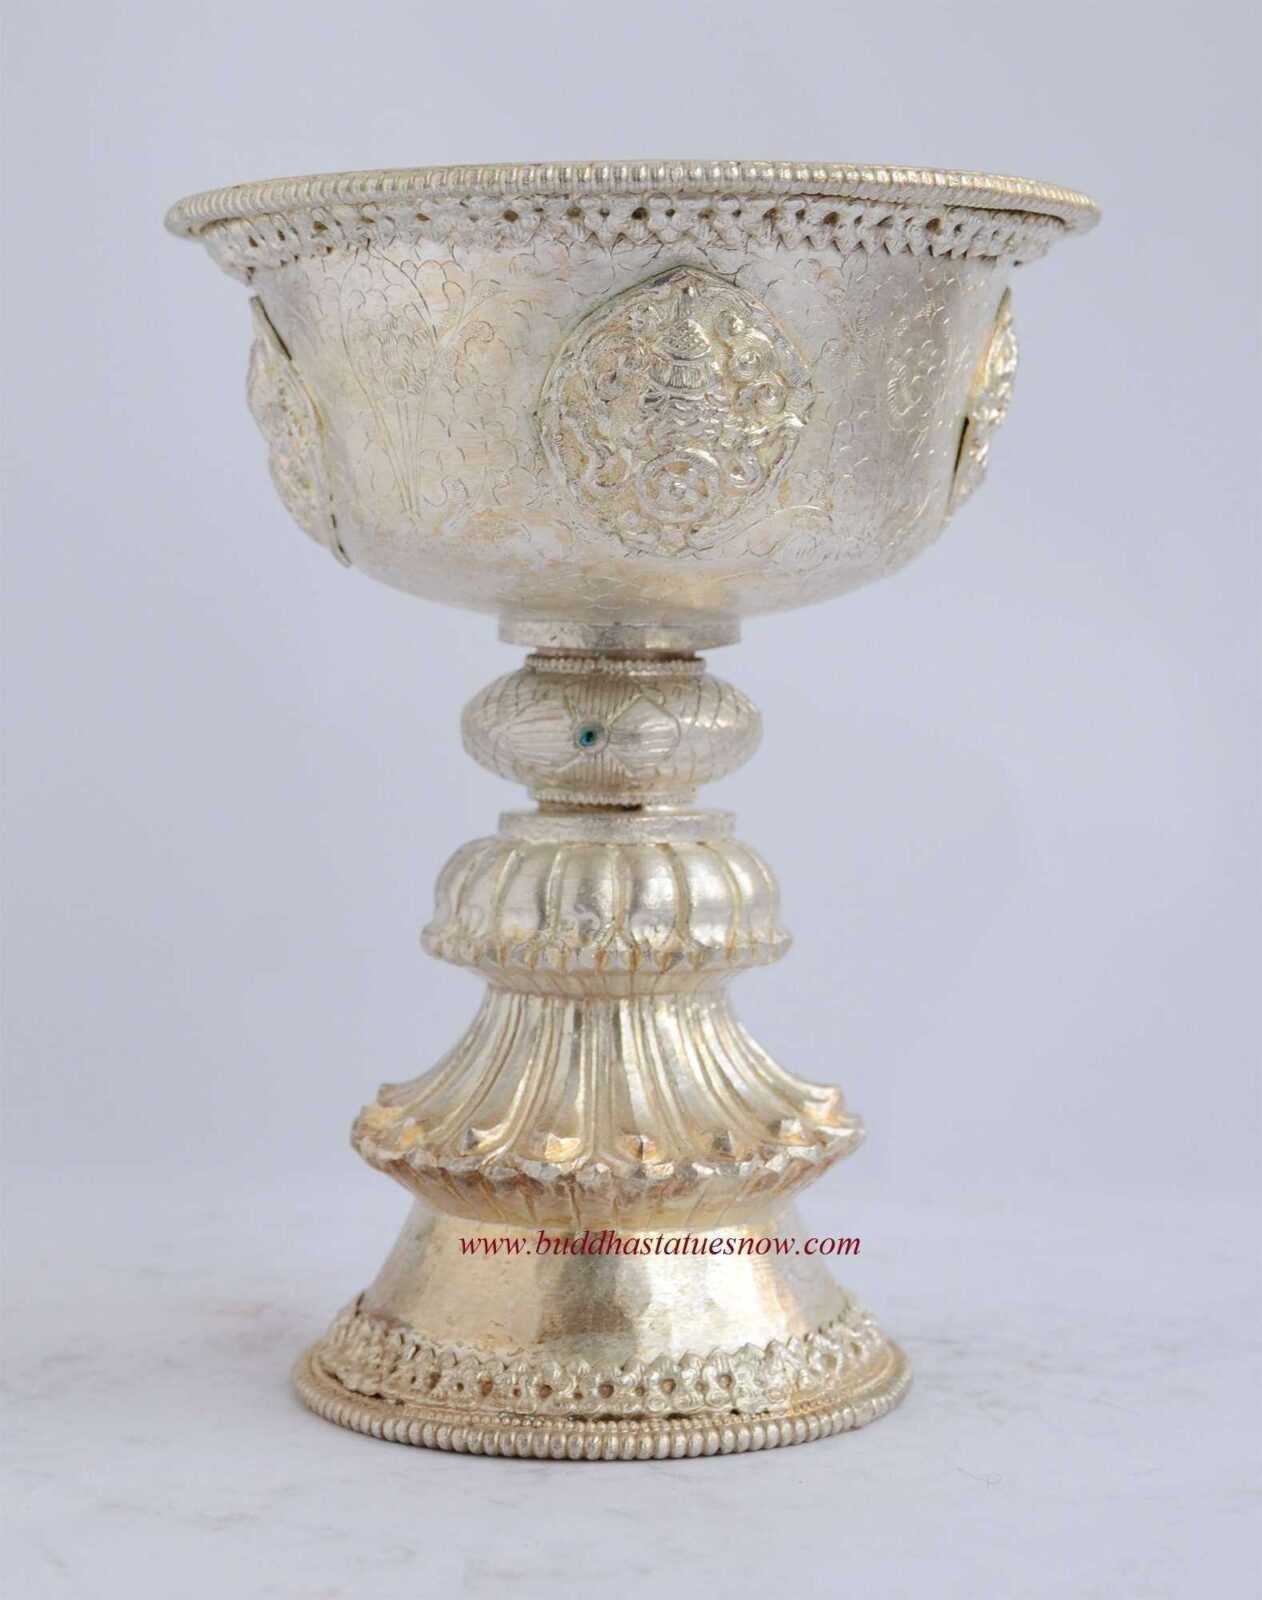 Tibetan Butter Lamp 6.5" (Copper Alloy, Silver Plated)